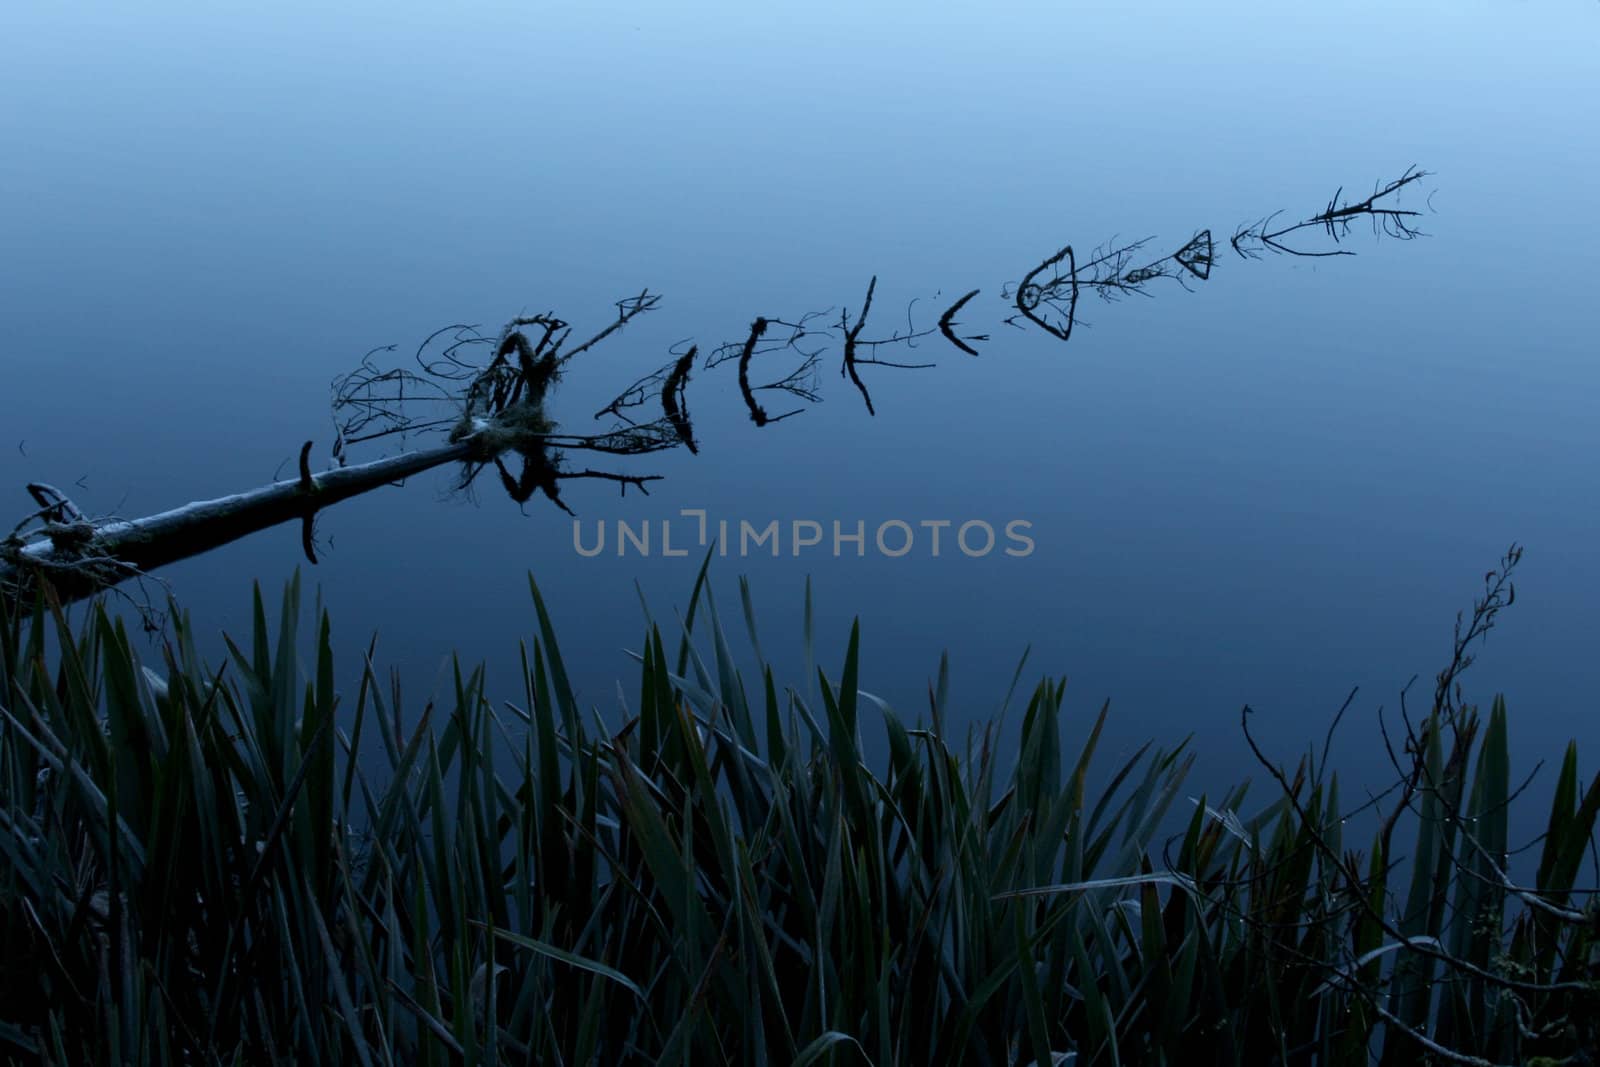 A reflection in Lake Matheson, NZ